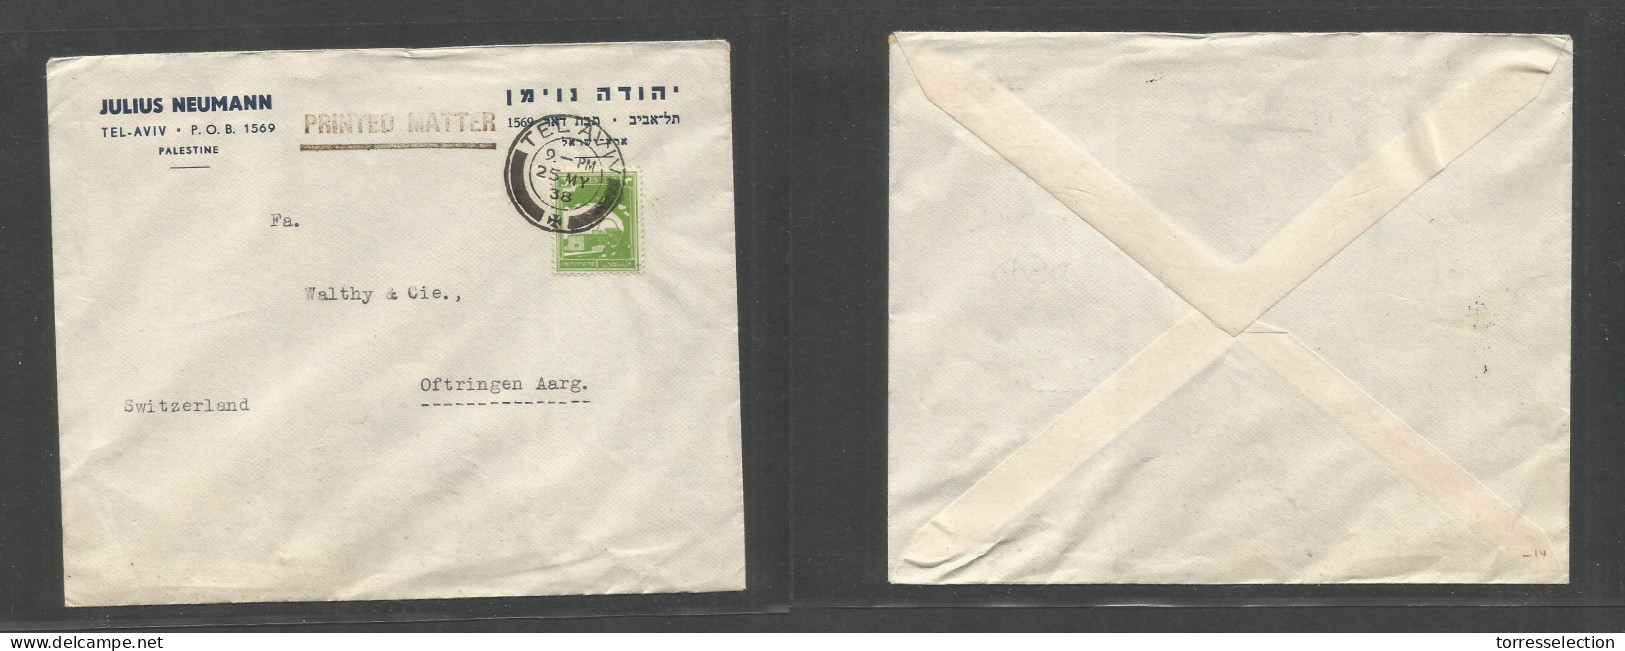 PALESTINE. 1938 (25 May) Tel Aviv - Switzerland, Oftringen Aargan. PM Rate Unsealed Comercial Bilingual Fkd Env, Cds. VF - Palästina